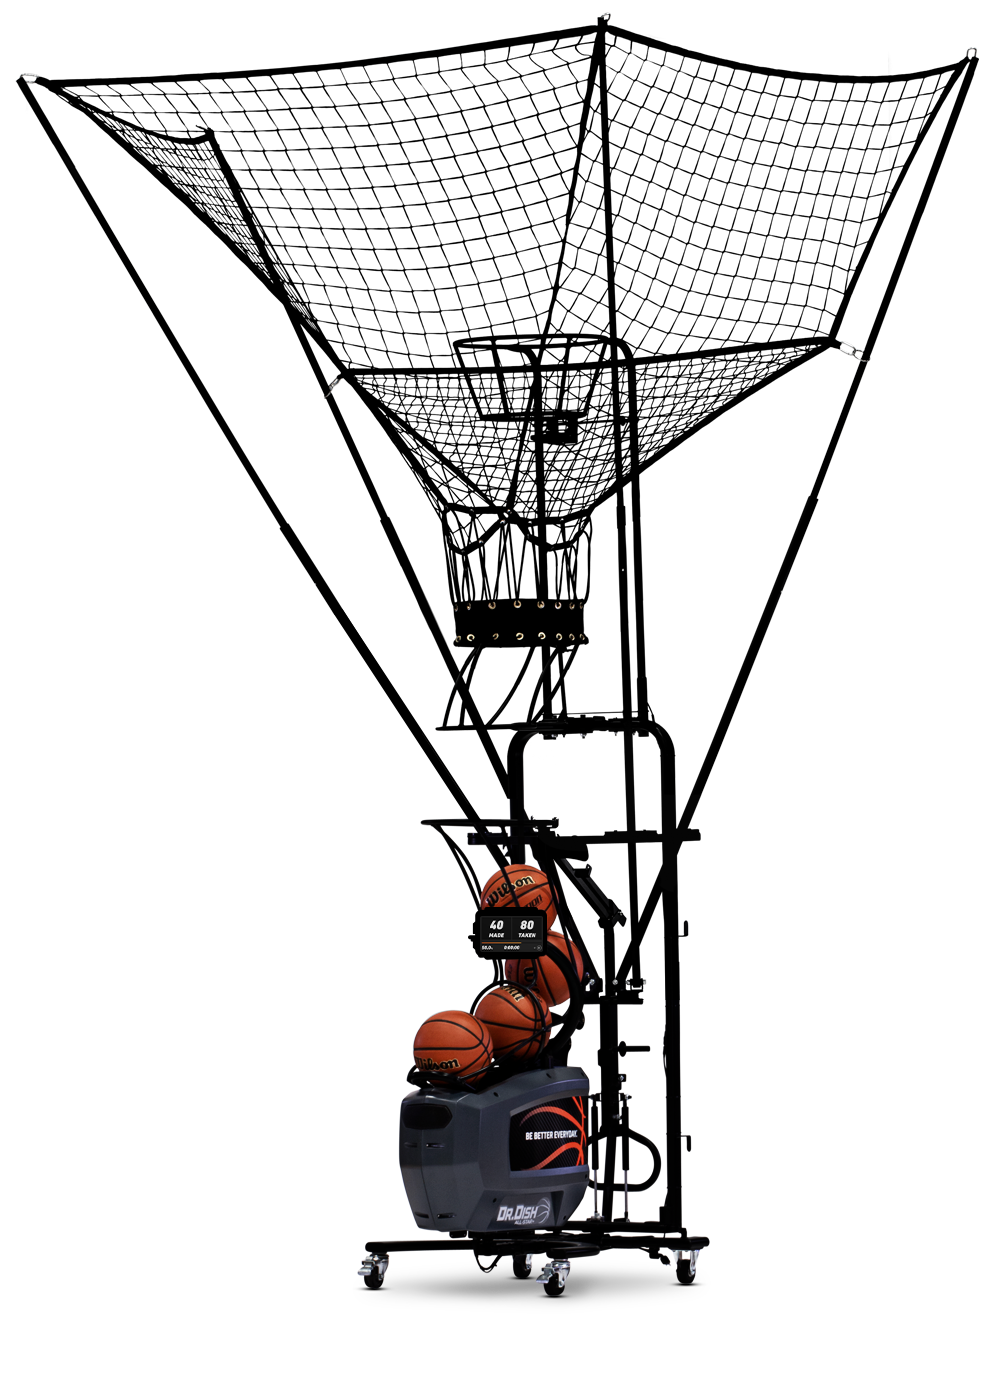 Dr. Dish All-Star+ Basketball Shooting Machine